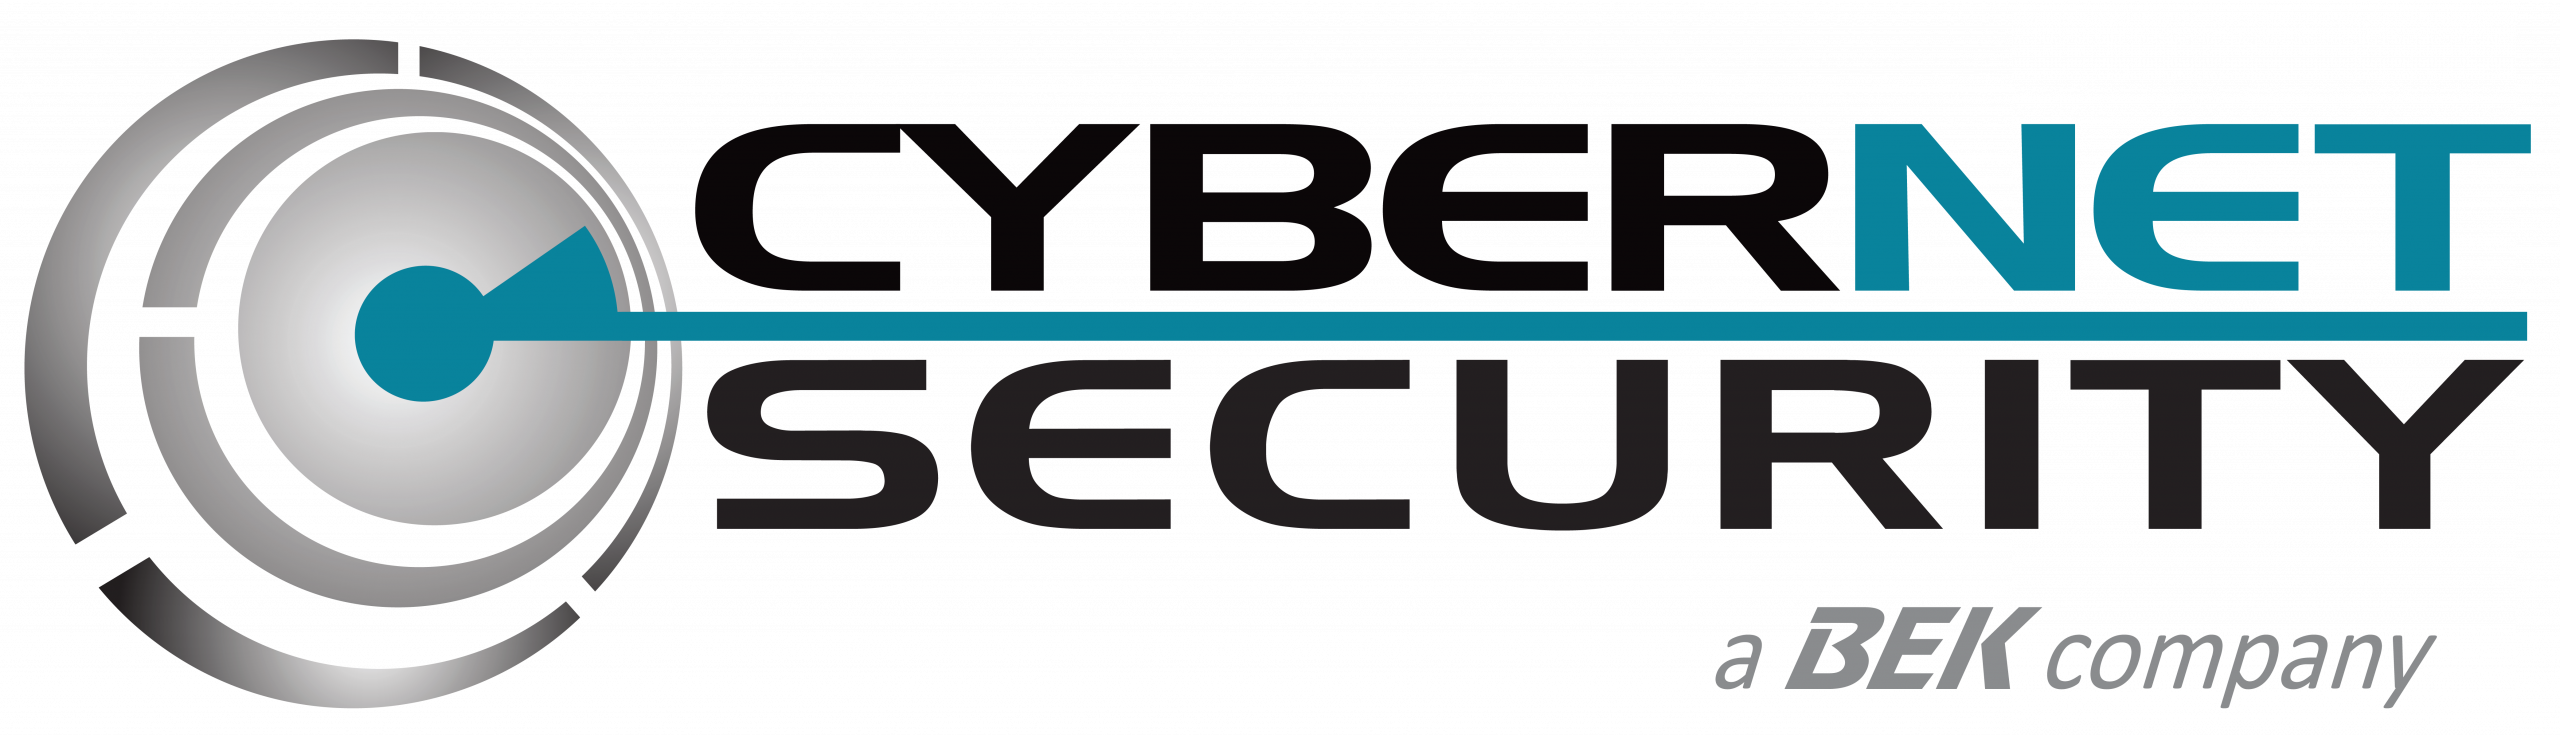 Cybernet Security a BEK company